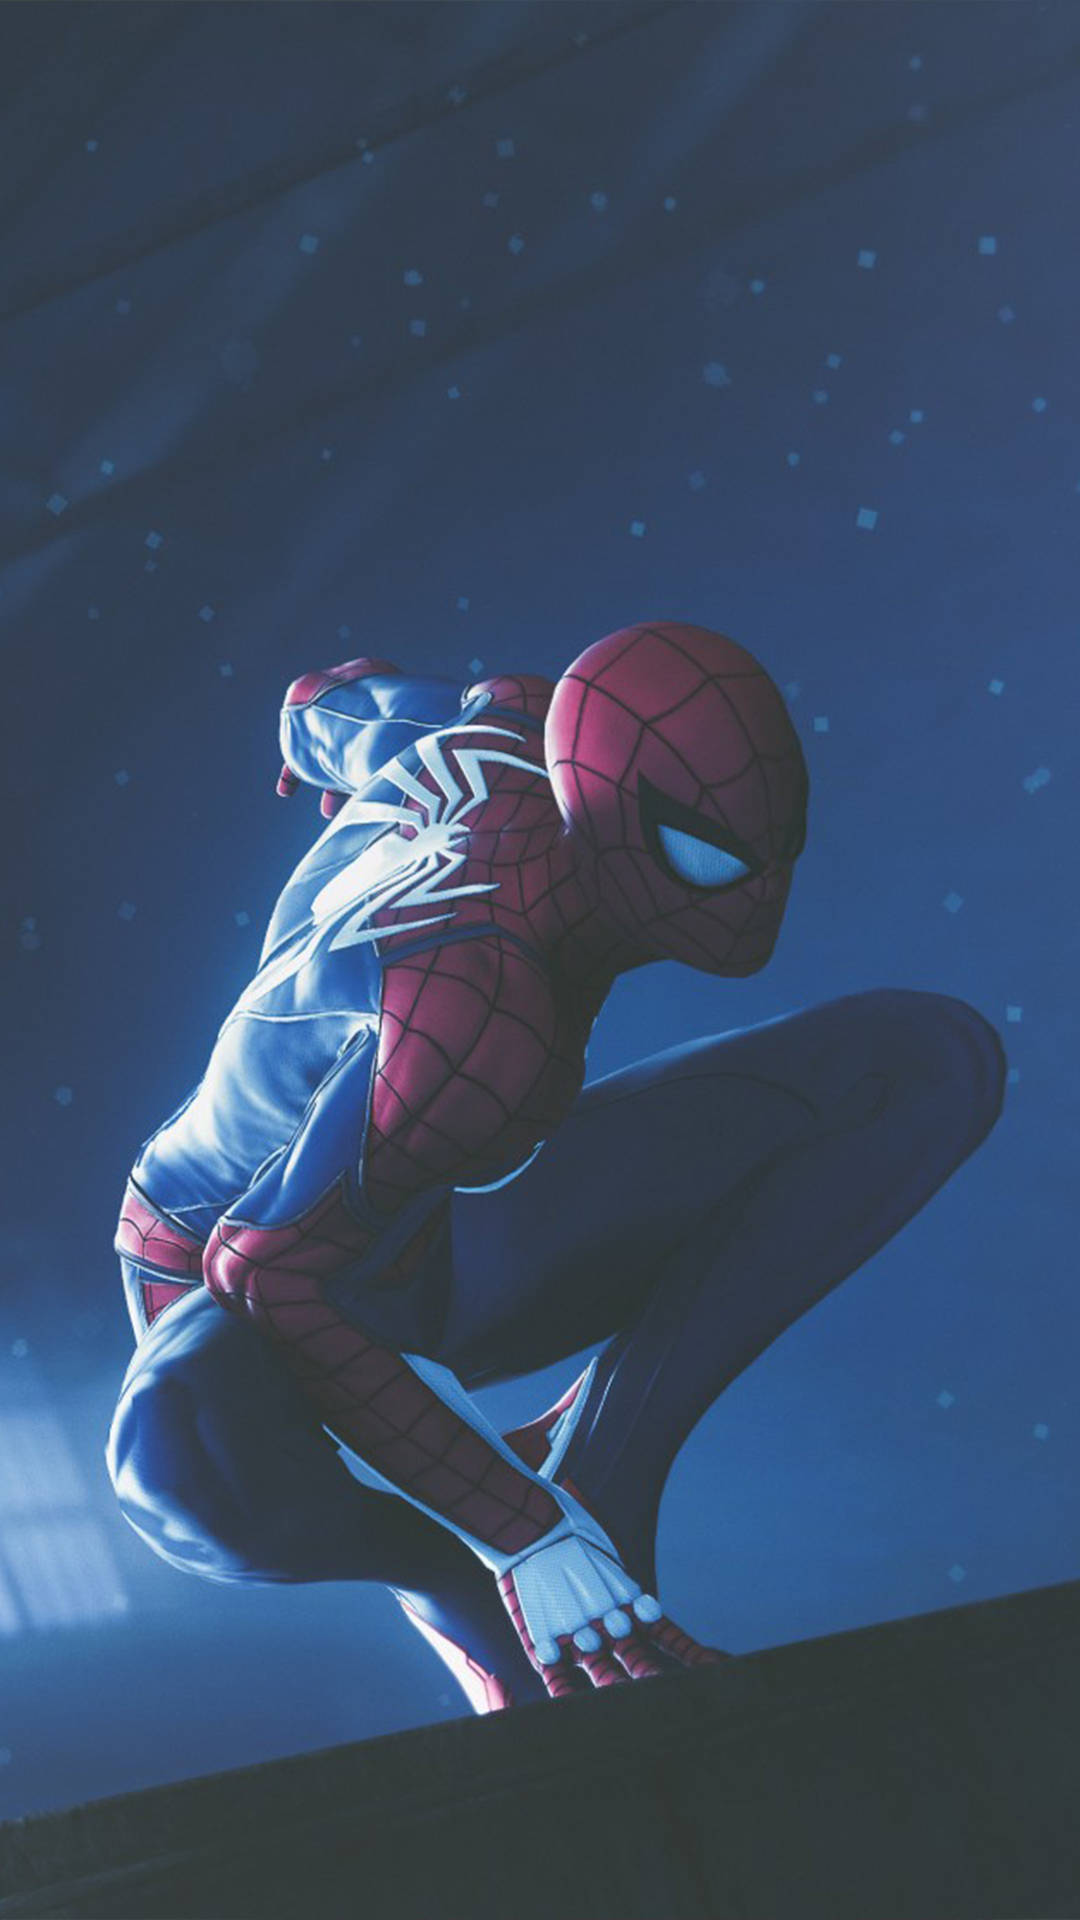 Free Spider Man Mobile Wallpaper Downloads, [100+] Spider Man Mobile  Wallpapers for FREE 